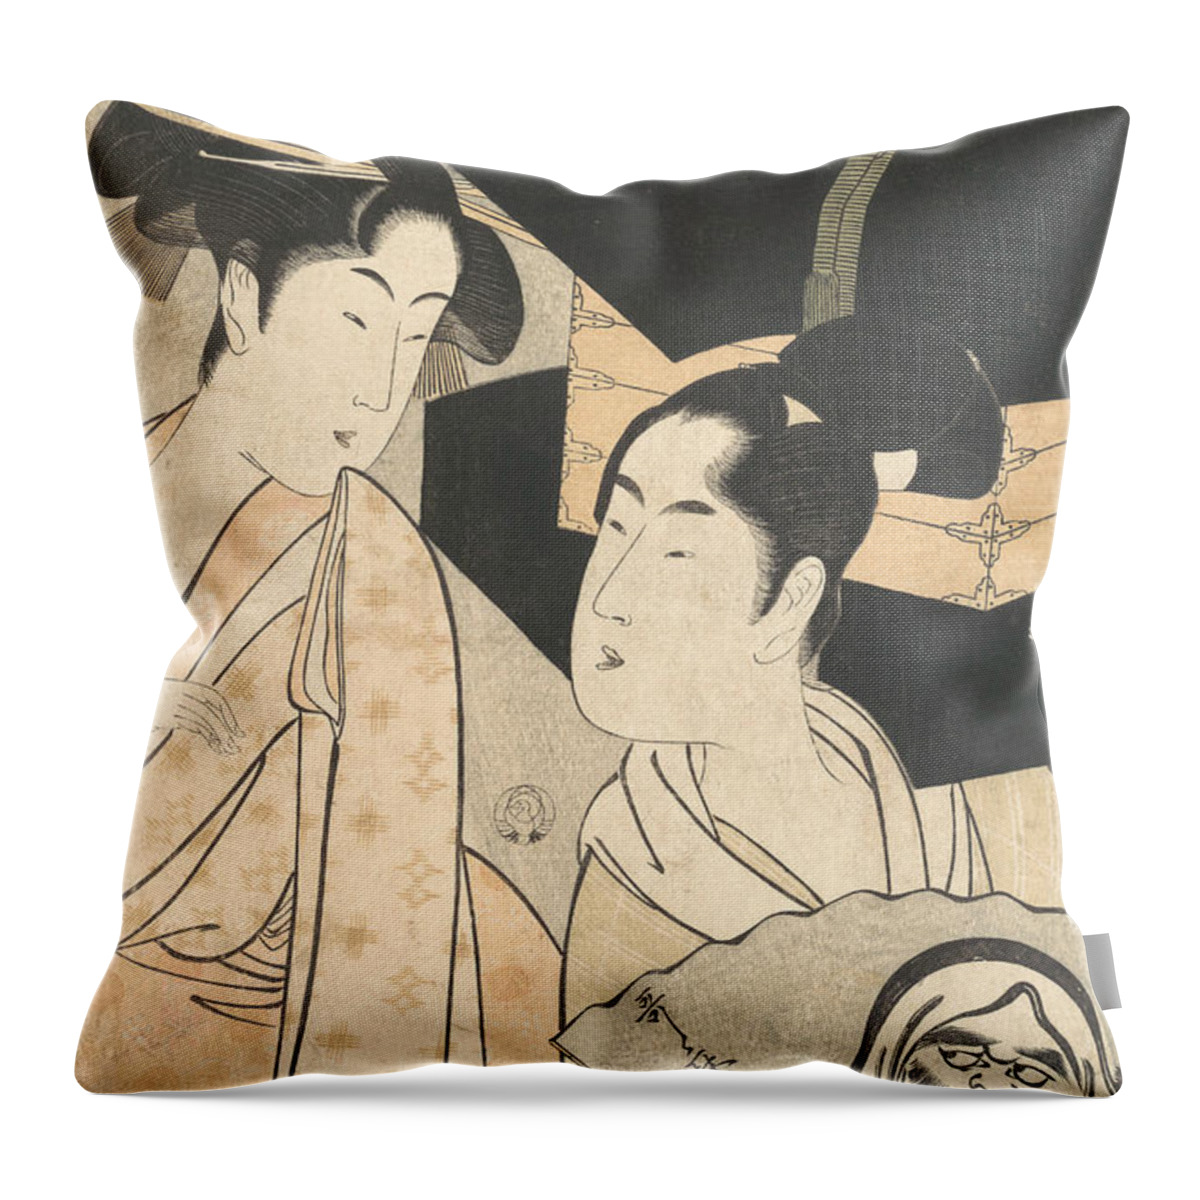 19th Century Art Throw Pillow featuring the relief Fan Vendor by Kitagawa Utamaro